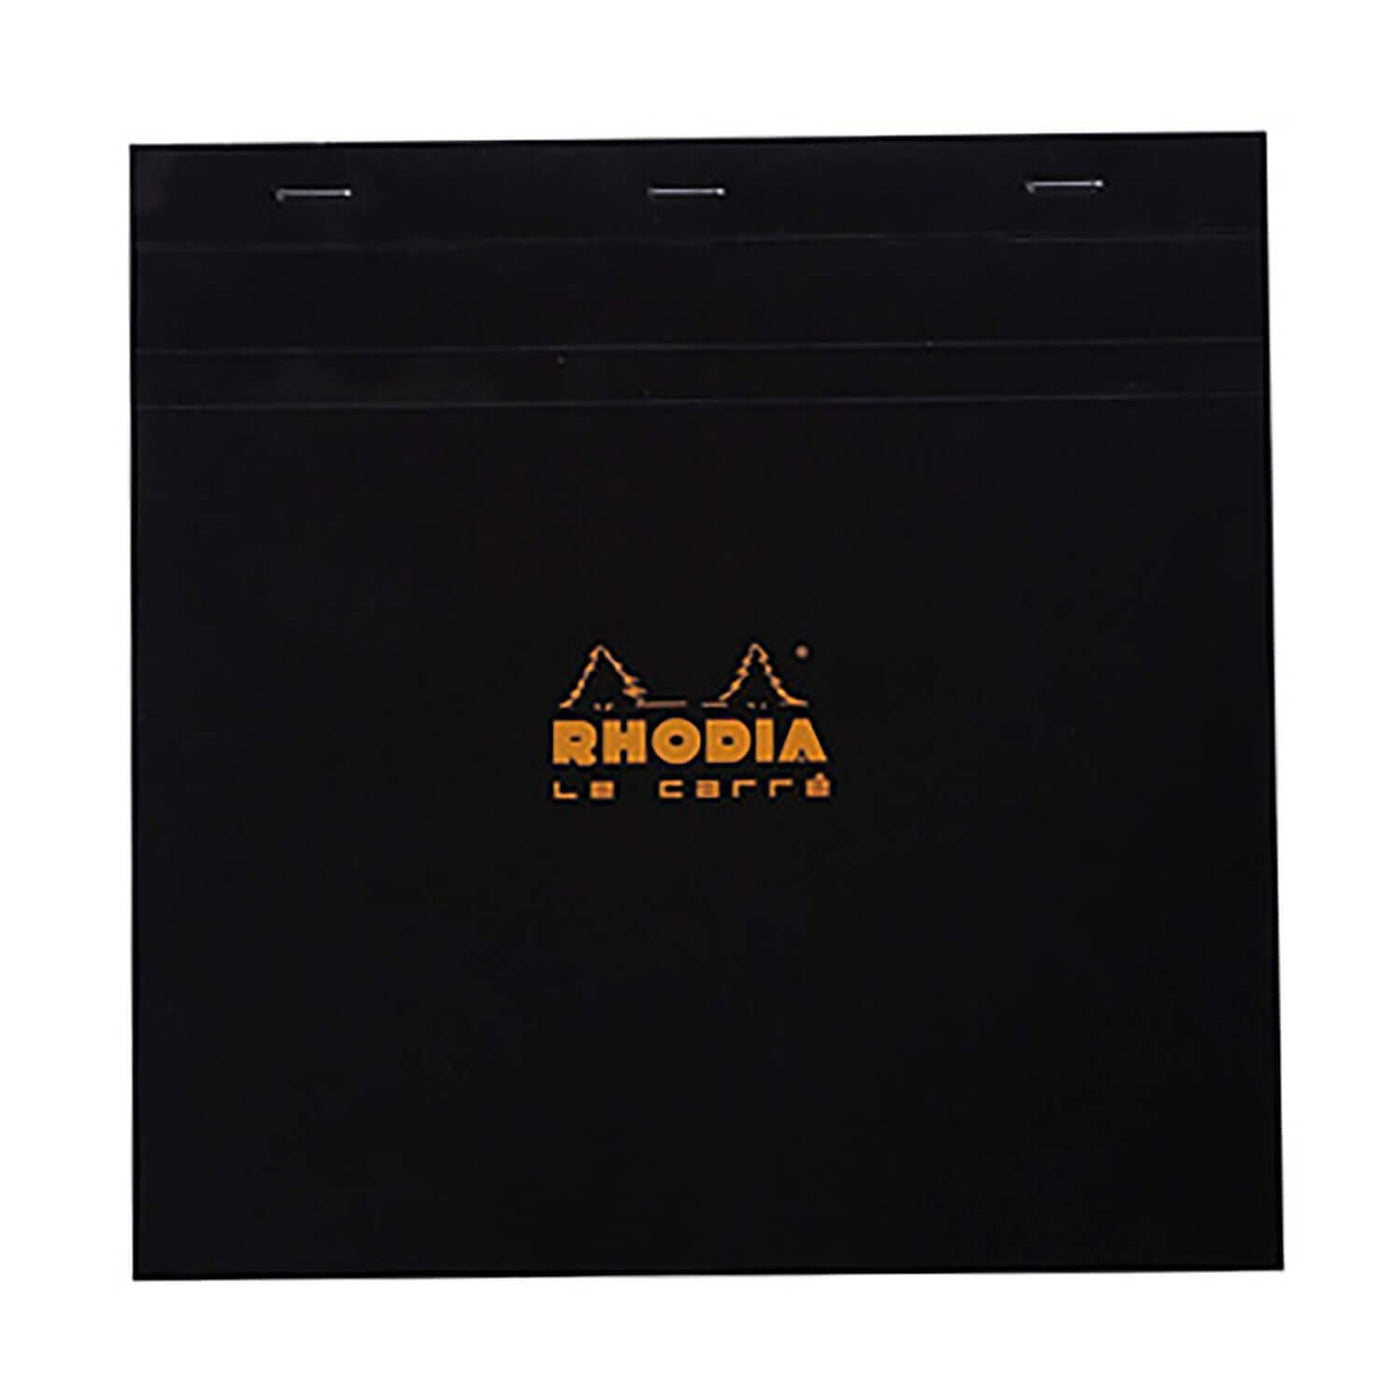 Rhodia Le Carre Notepad, Black - Ruled 1